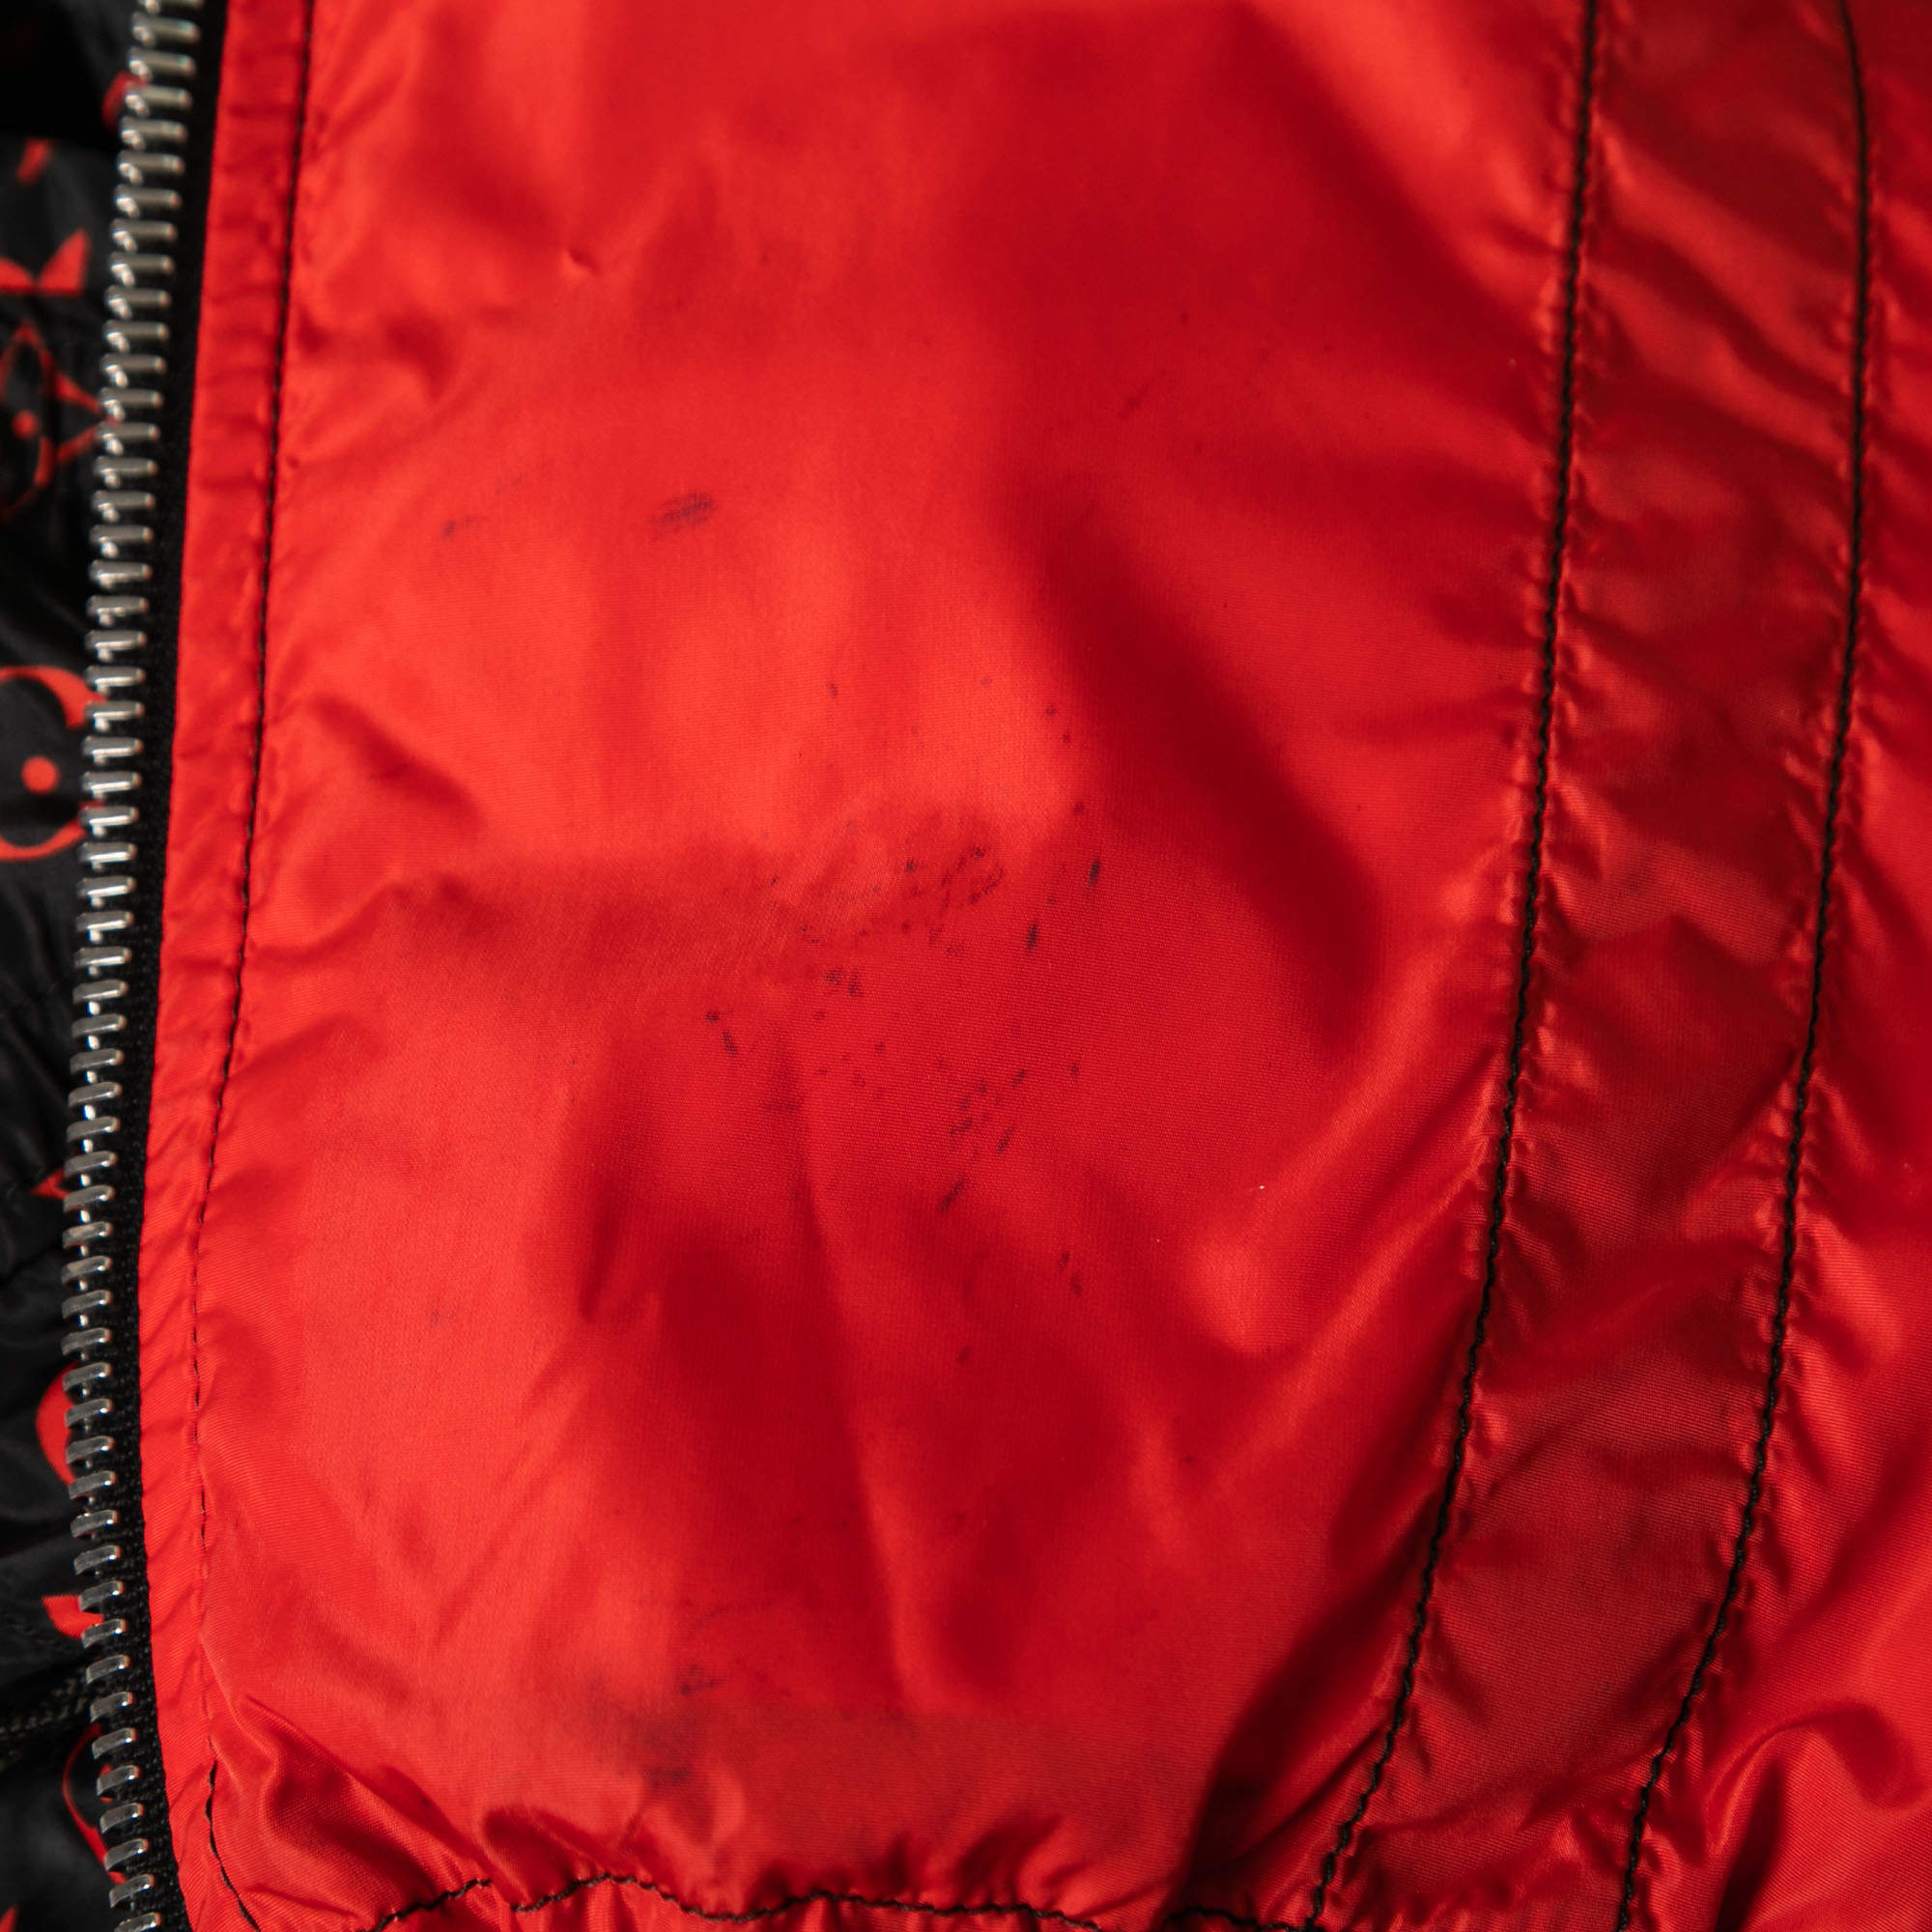 Louis Vuitton Black/Red Monogram Synthetic Reversible Windbreaker Jacket S Louis  Vuitton